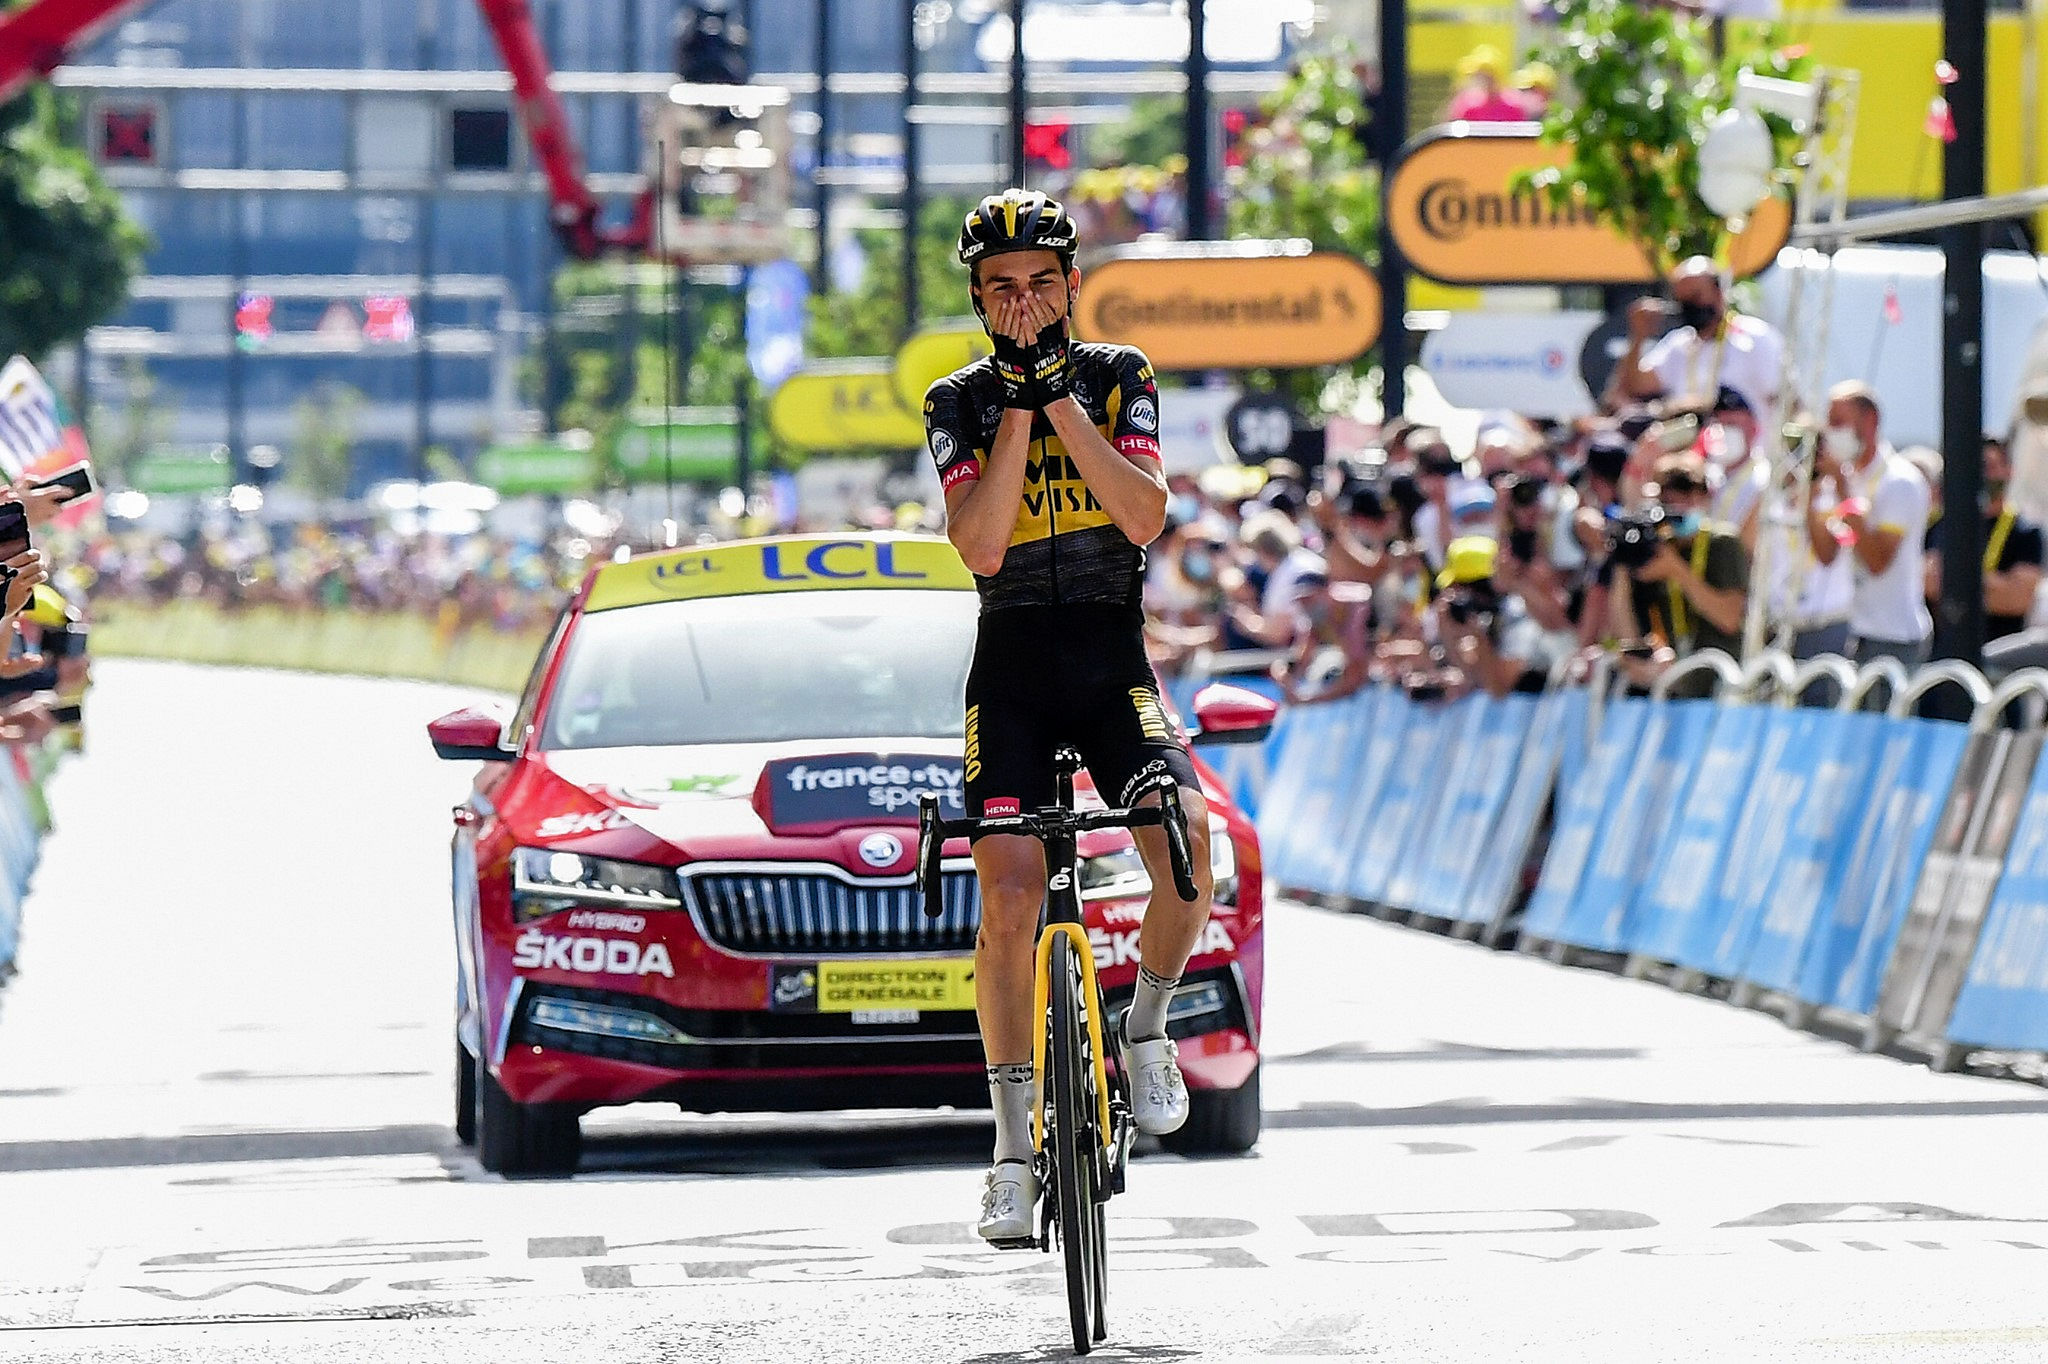 Tour de France 2021: etap 15. Andora dla Seppa Kussa, faworyci na remis